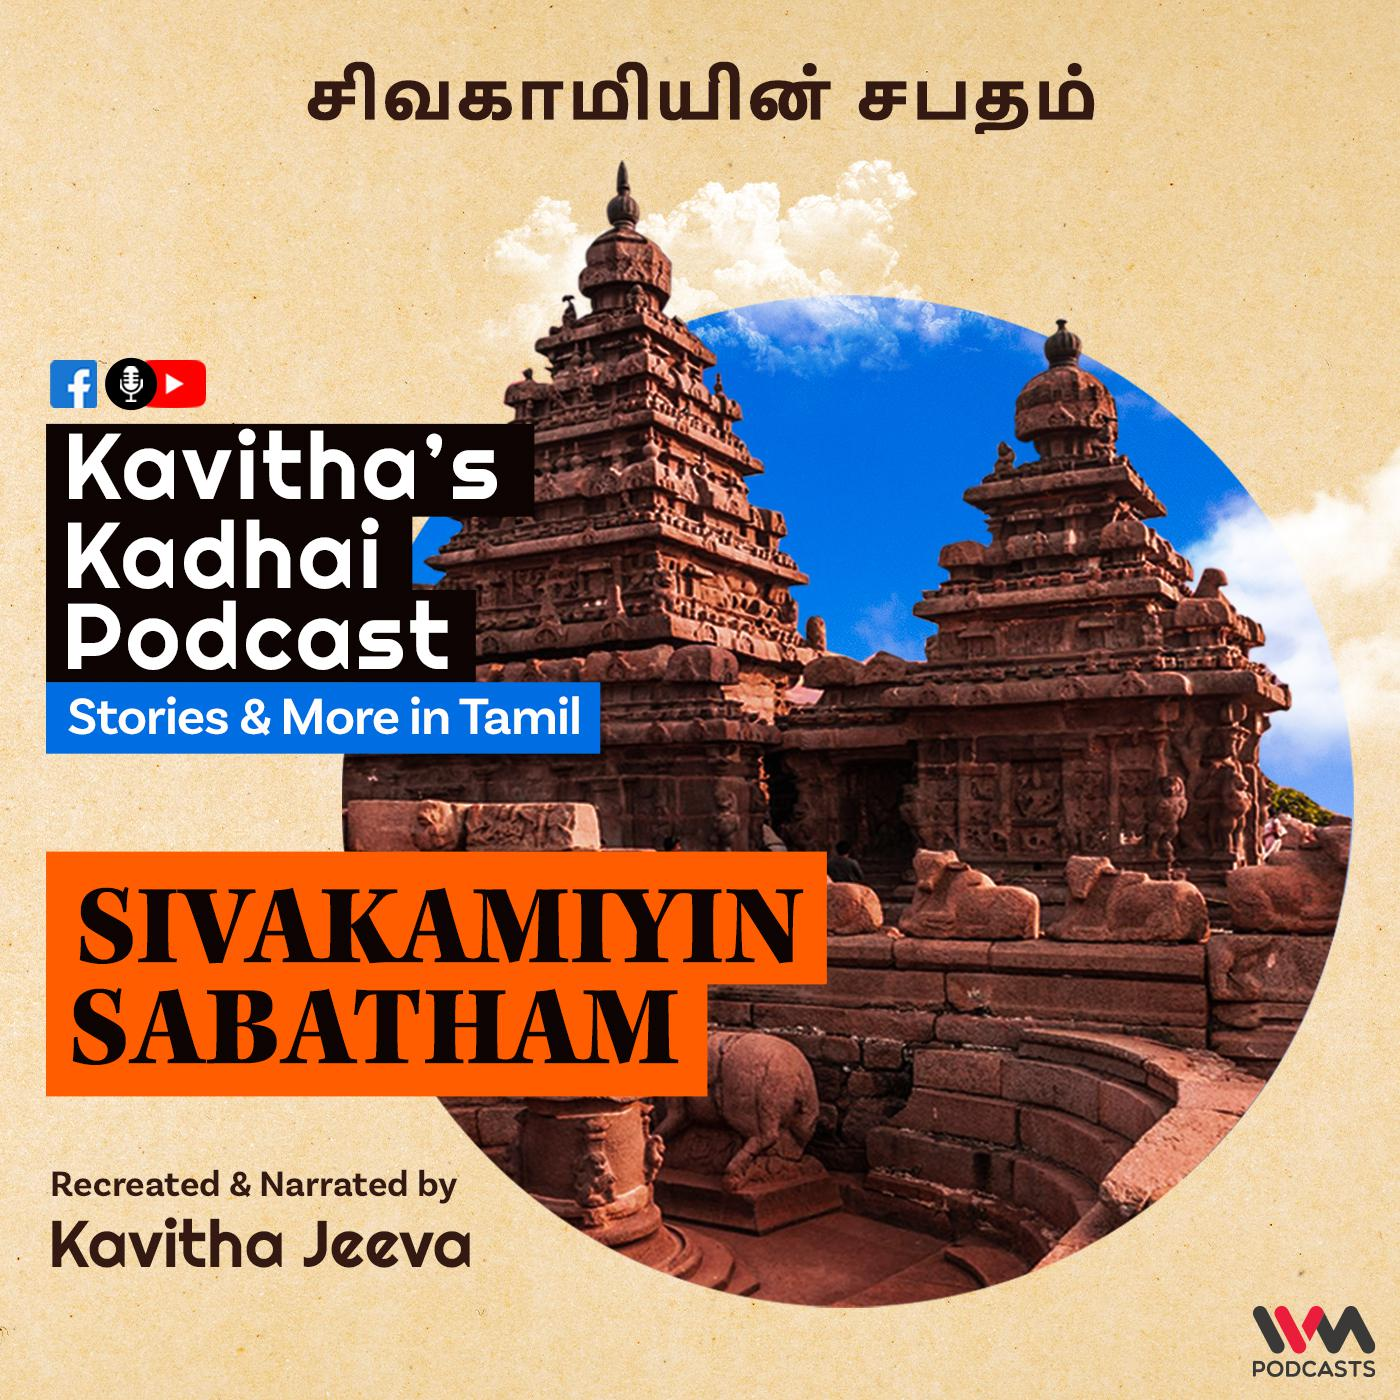 KadhaiPodcast’s Sivakamiyin Sabatham with Kavitha Jeeva - Episode #138